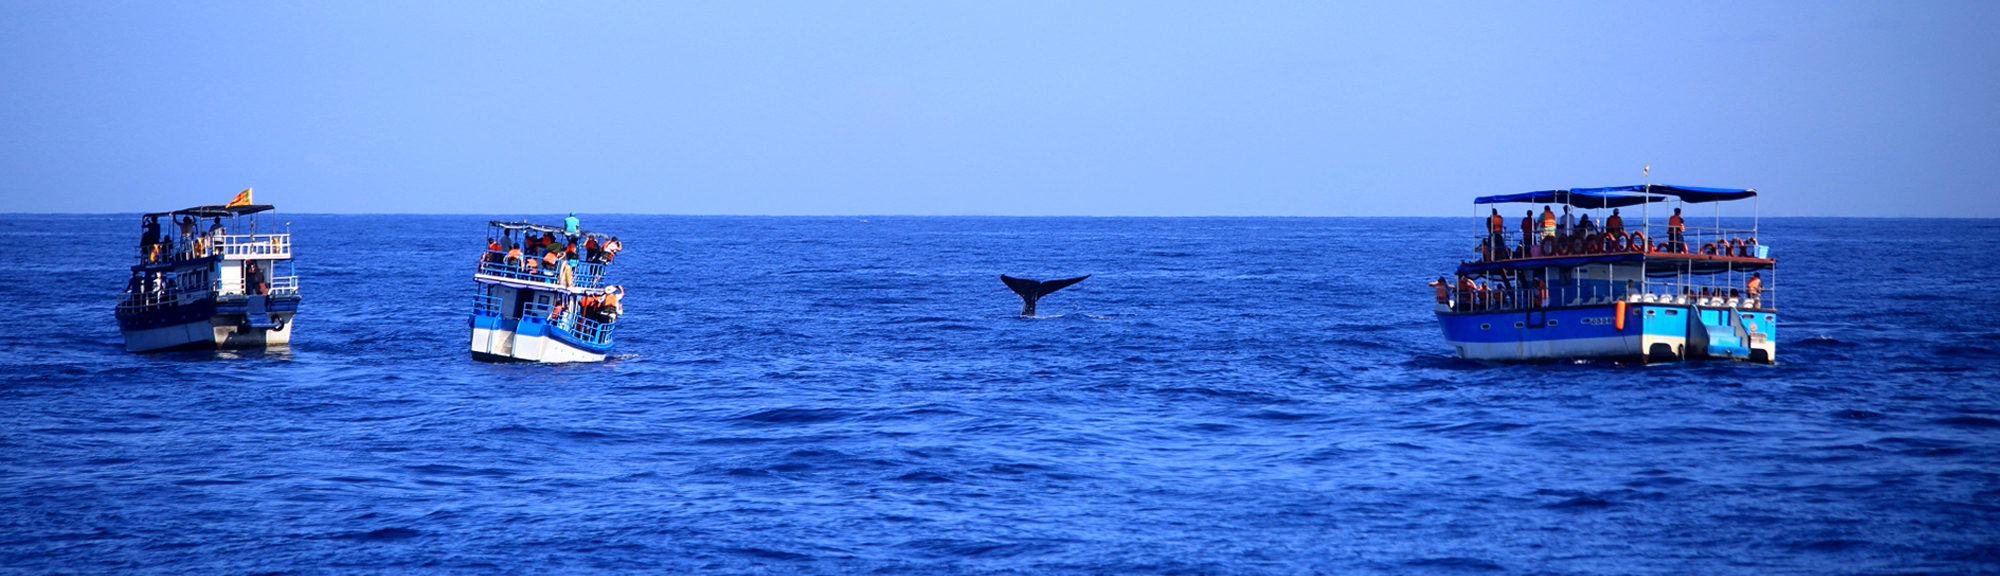 Whale and Dolphin Watching Sri Lanka | pradeeptours.com